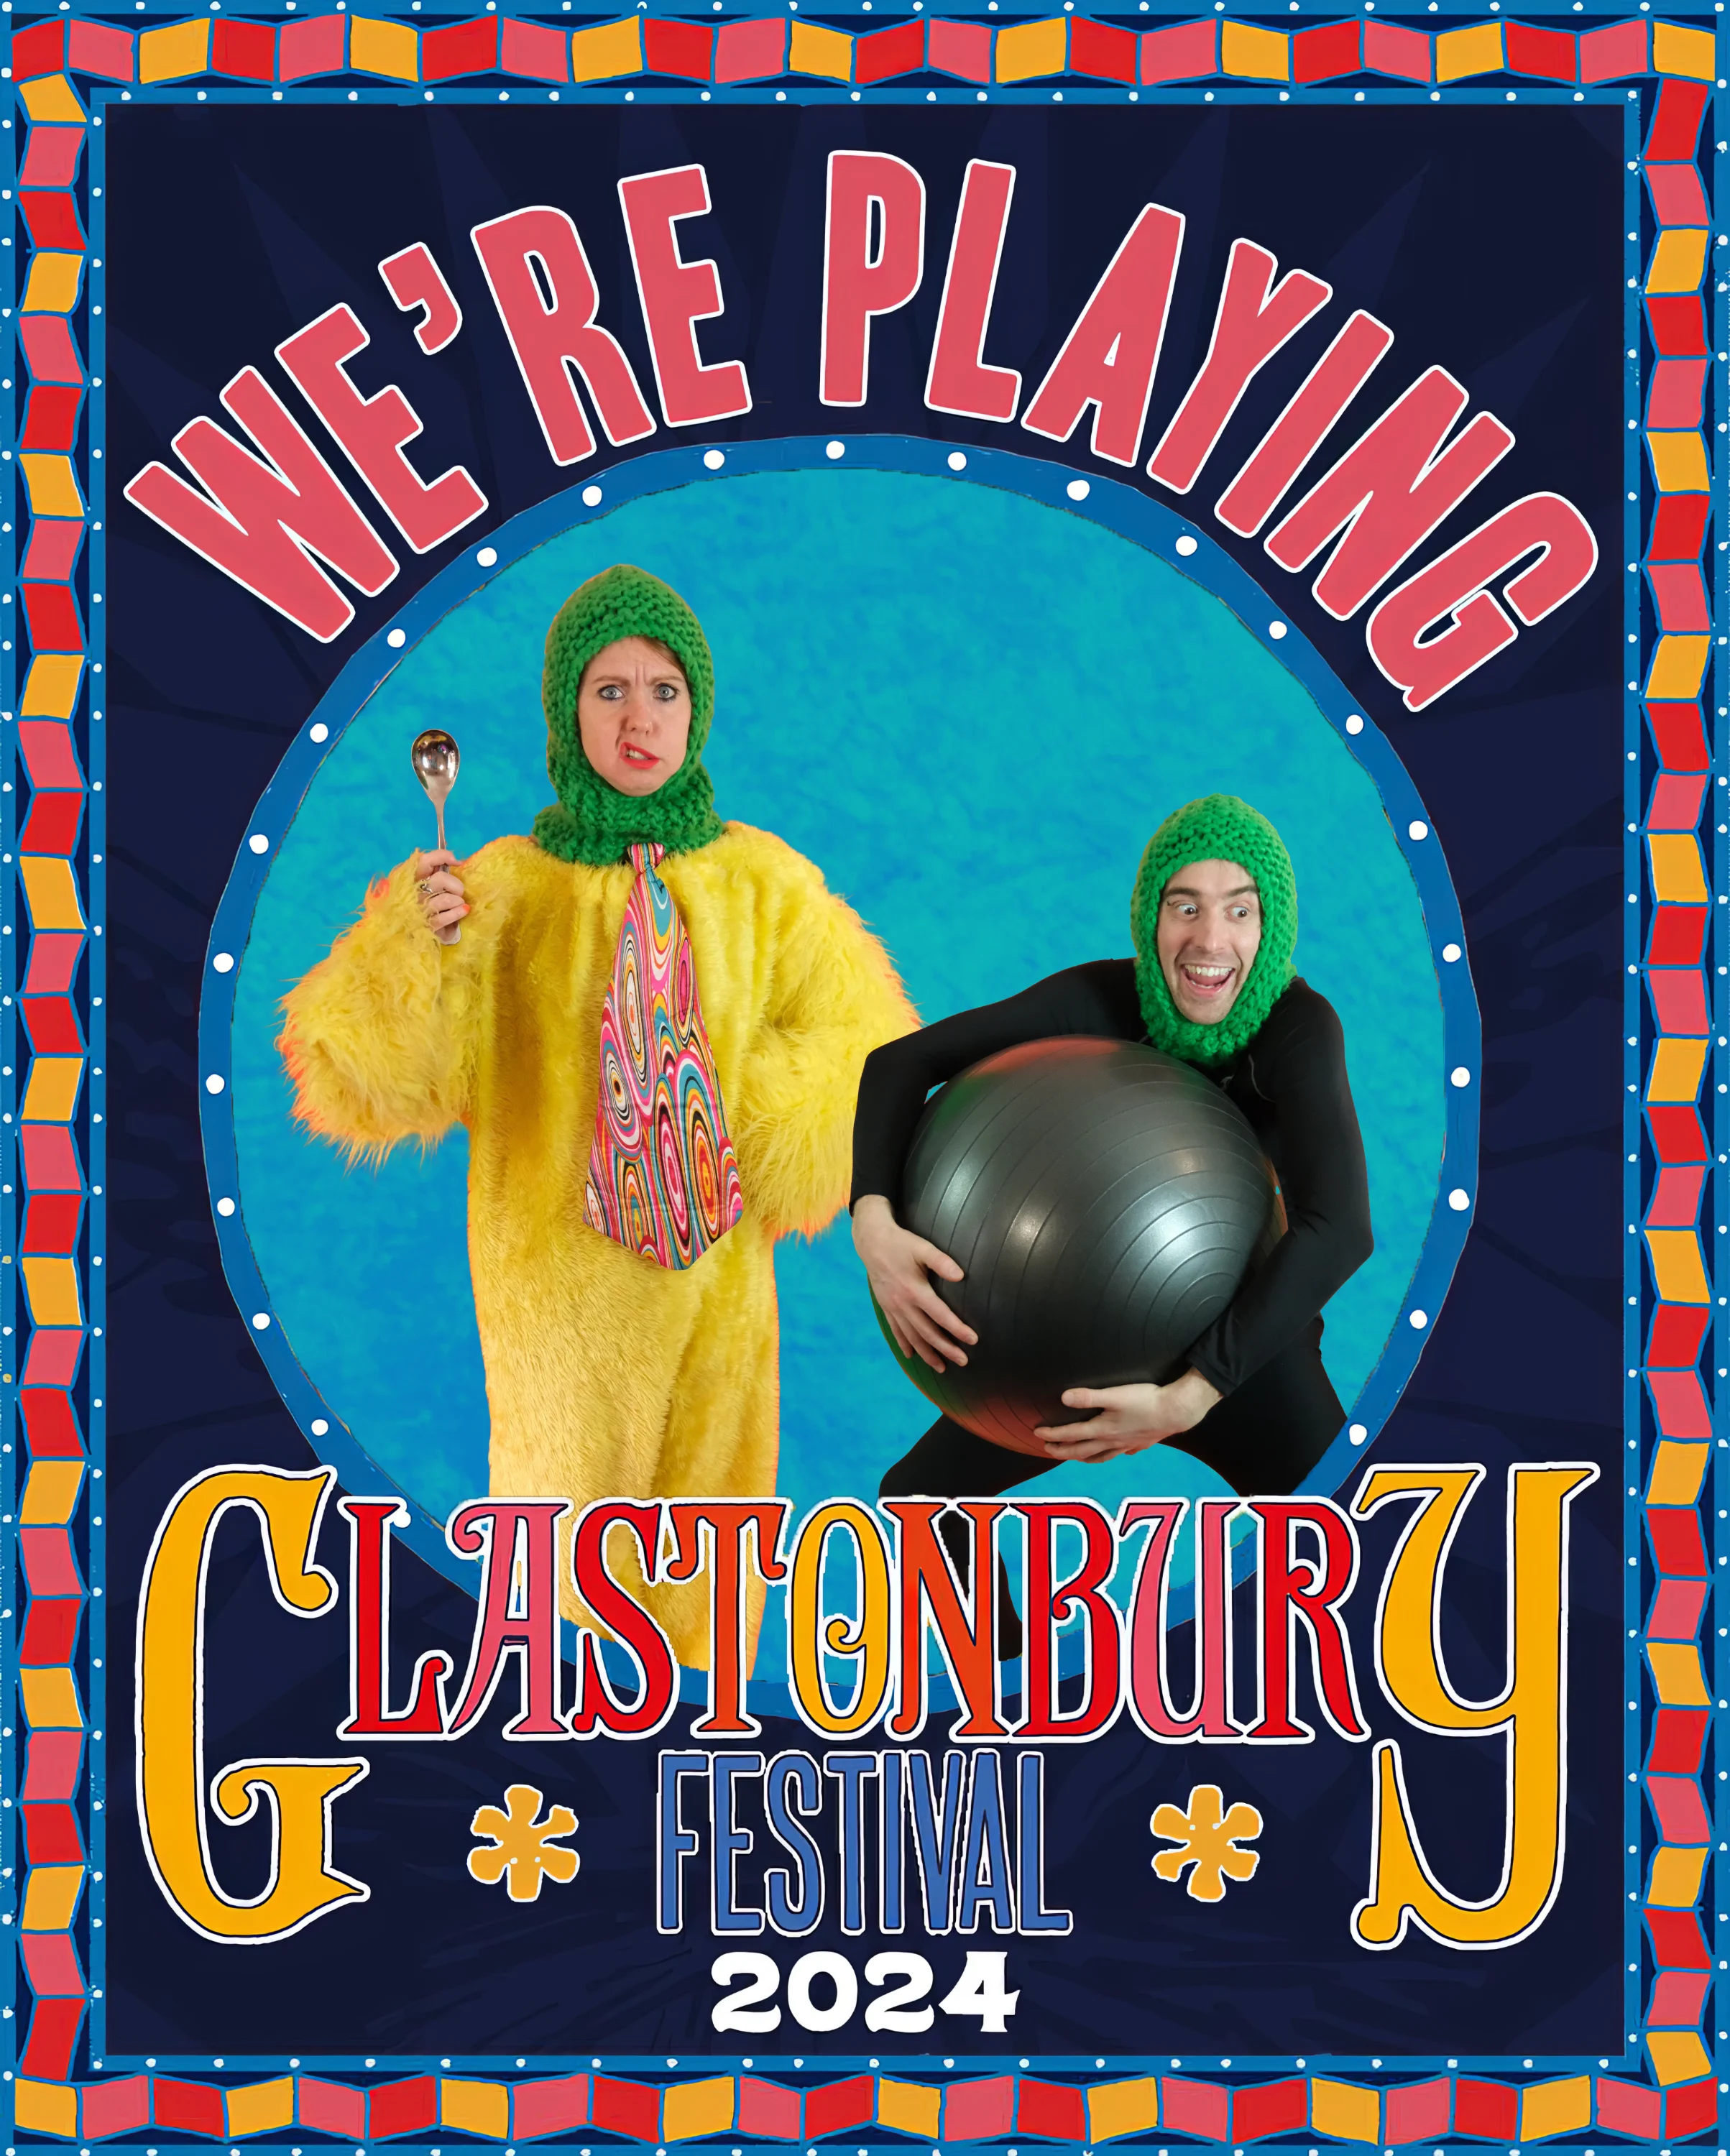 We're playing at Glastonbury 2024 - Playface at Glastonbury Festival